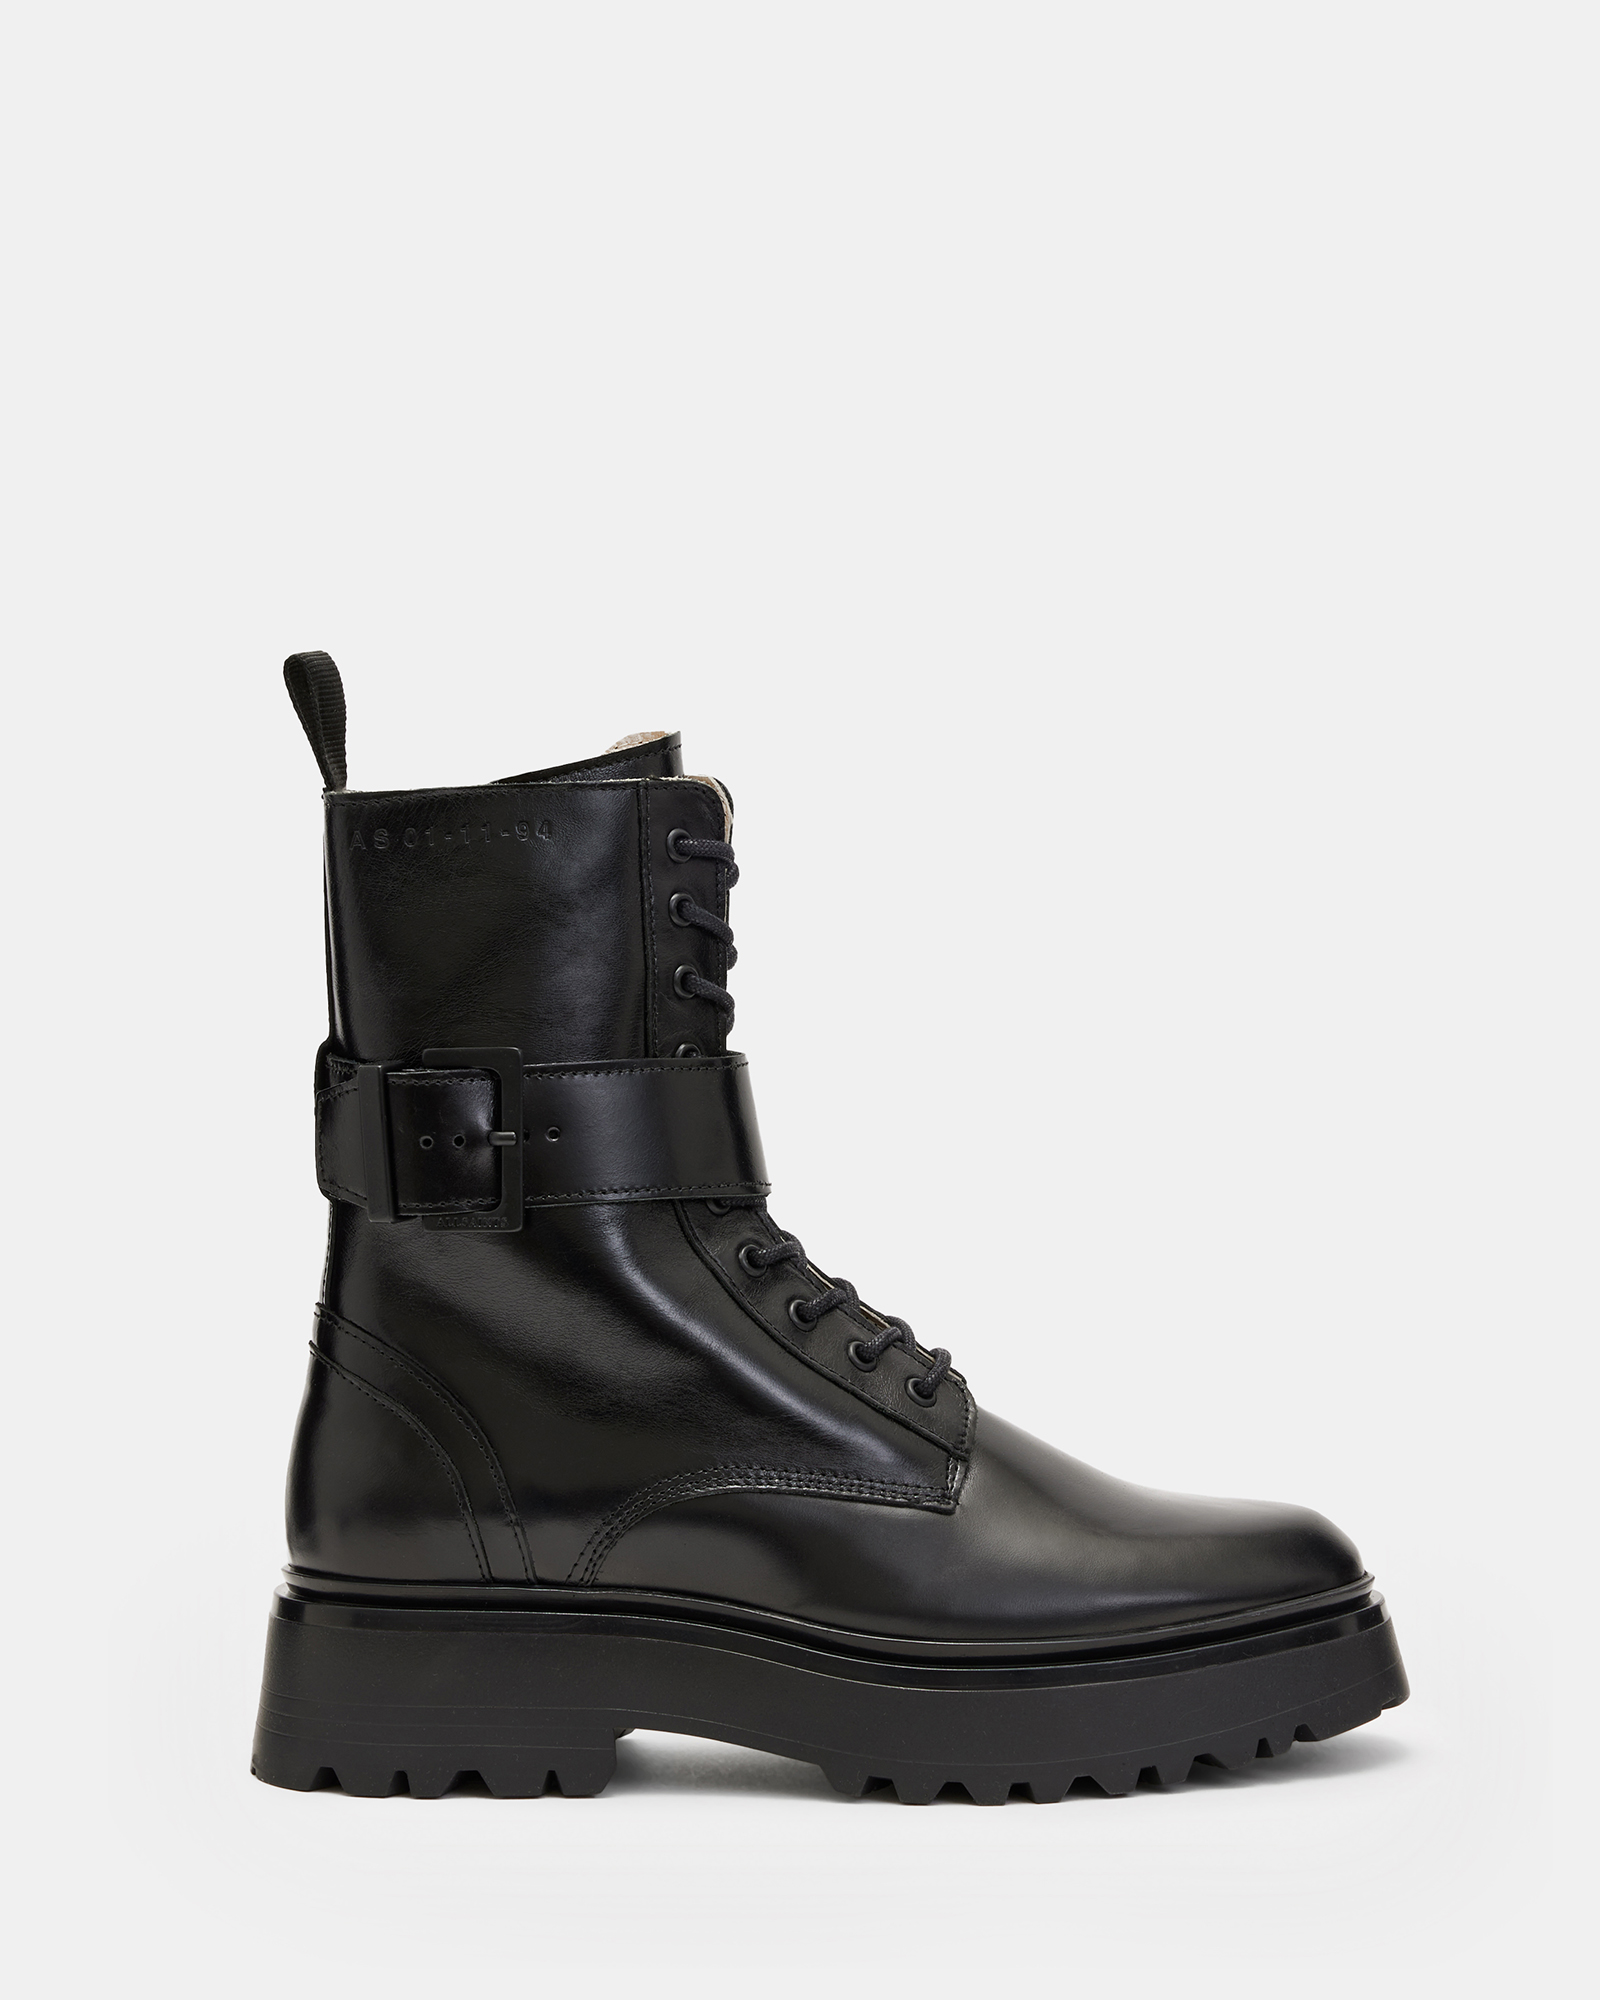 AllSaints Onyx Leather Boots,, Black